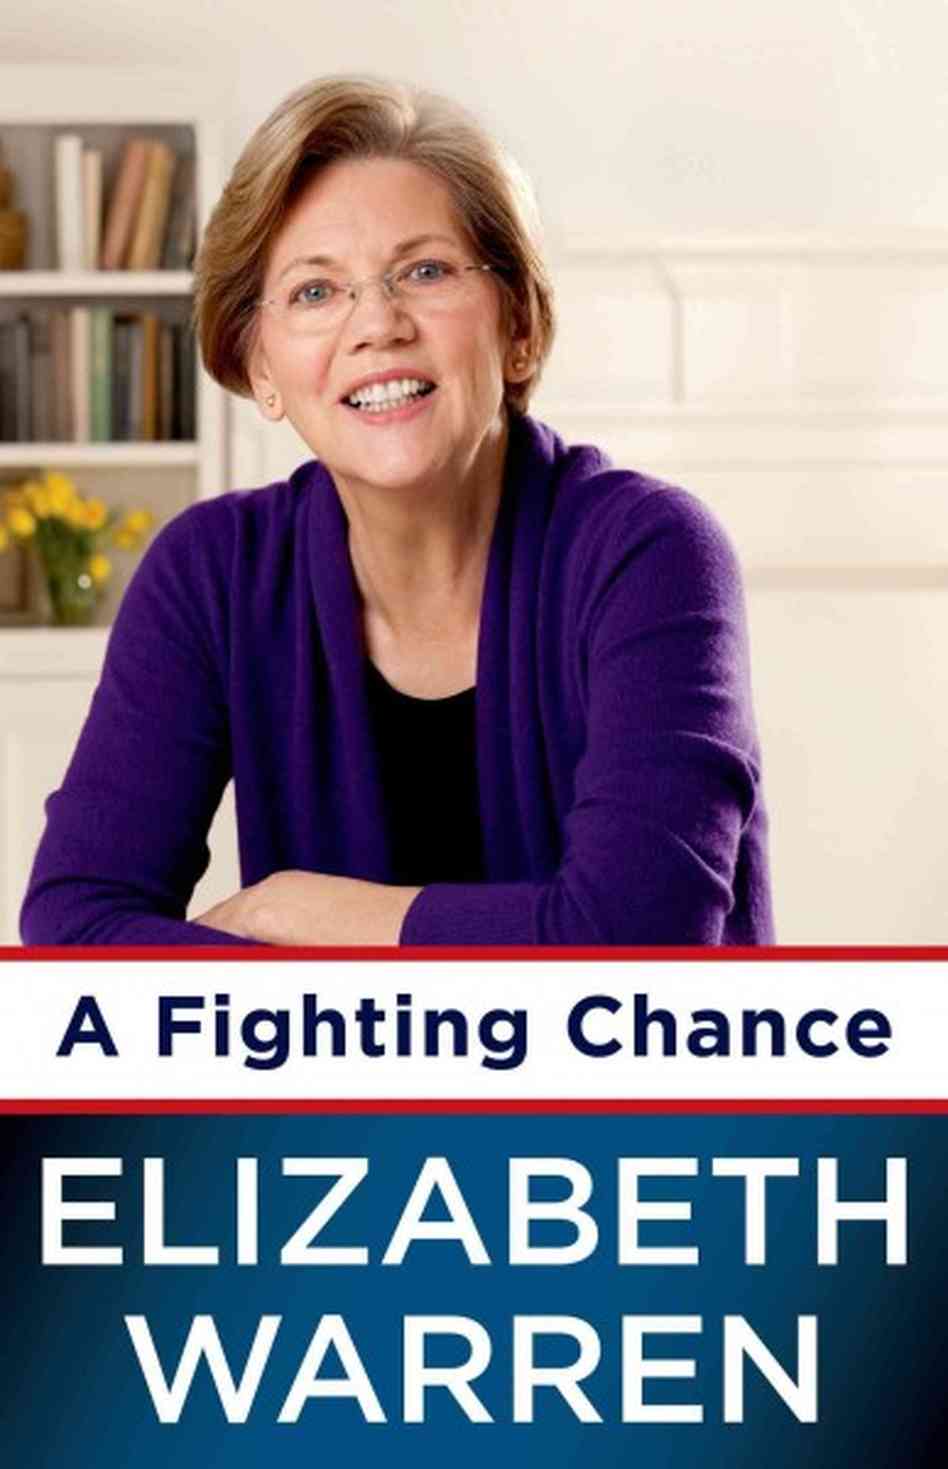 Elizabeth Warren's A Fighting Chance book